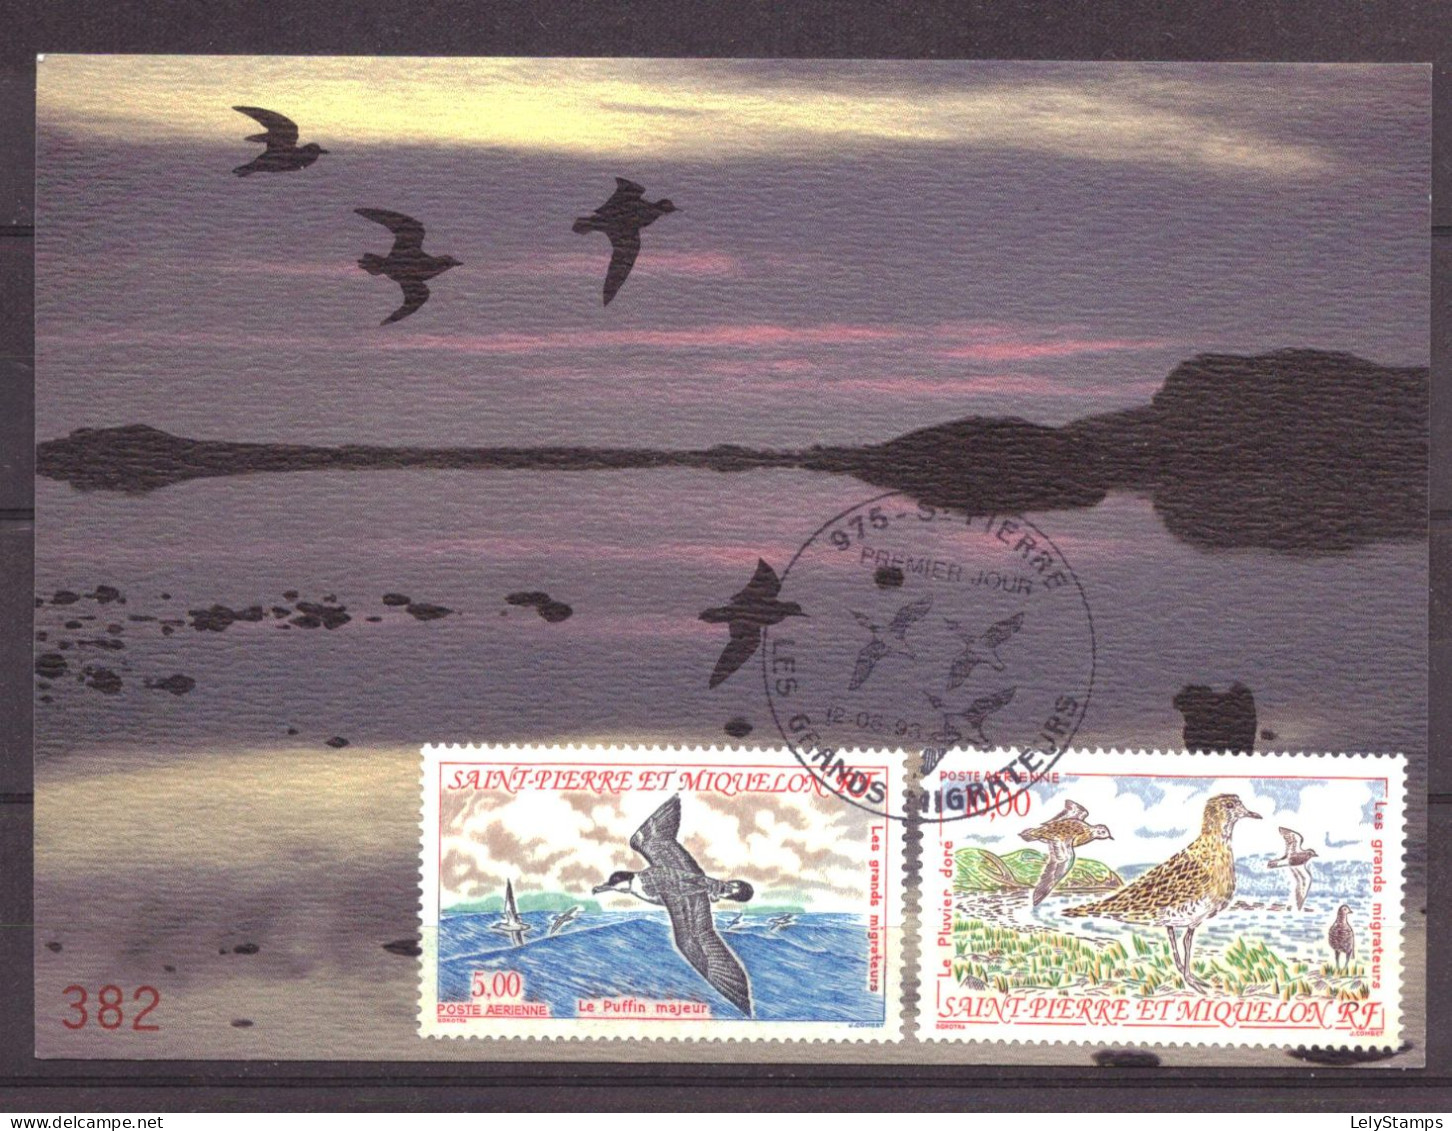 Saint-Pierre En Miquelon 654 & 655 FDC Birds Animals Nature (1993) - Maximumkarten